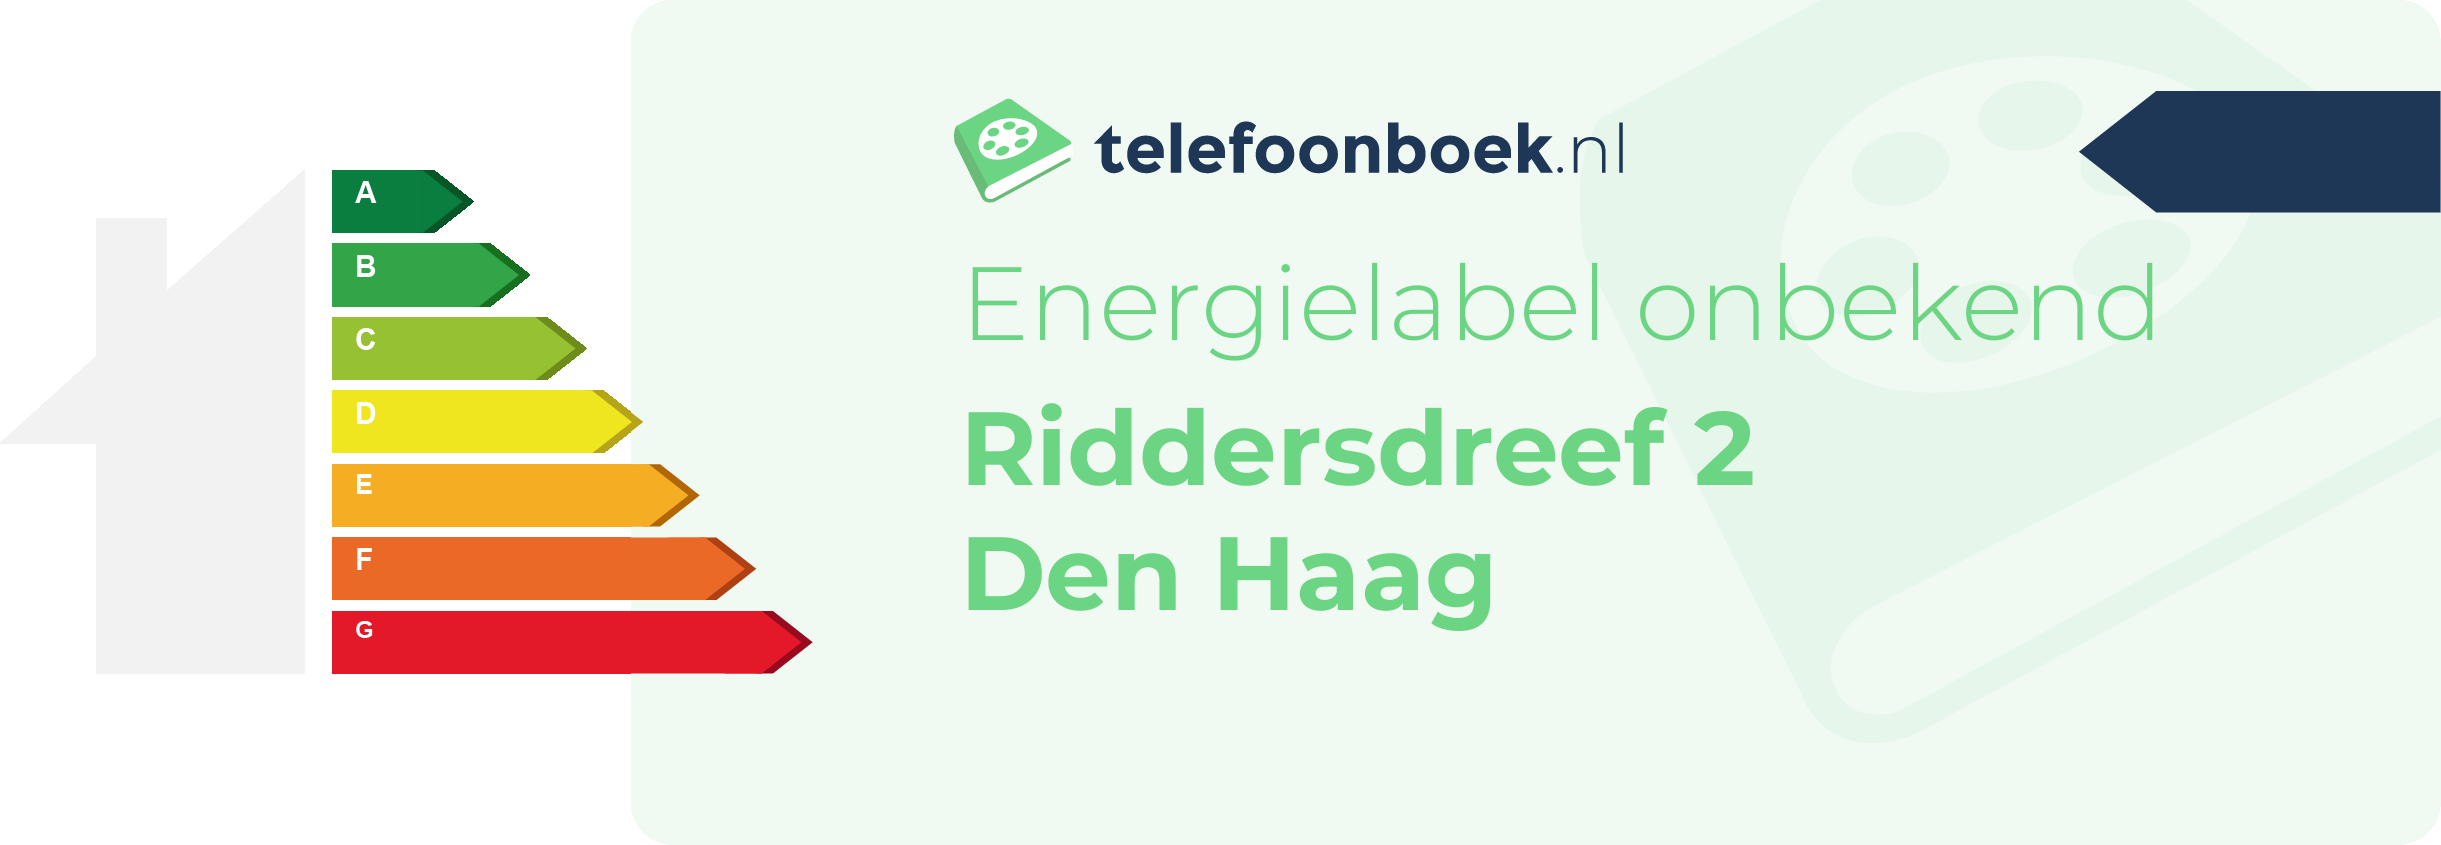 Energielabel Riddersdreef 2 Den Haag